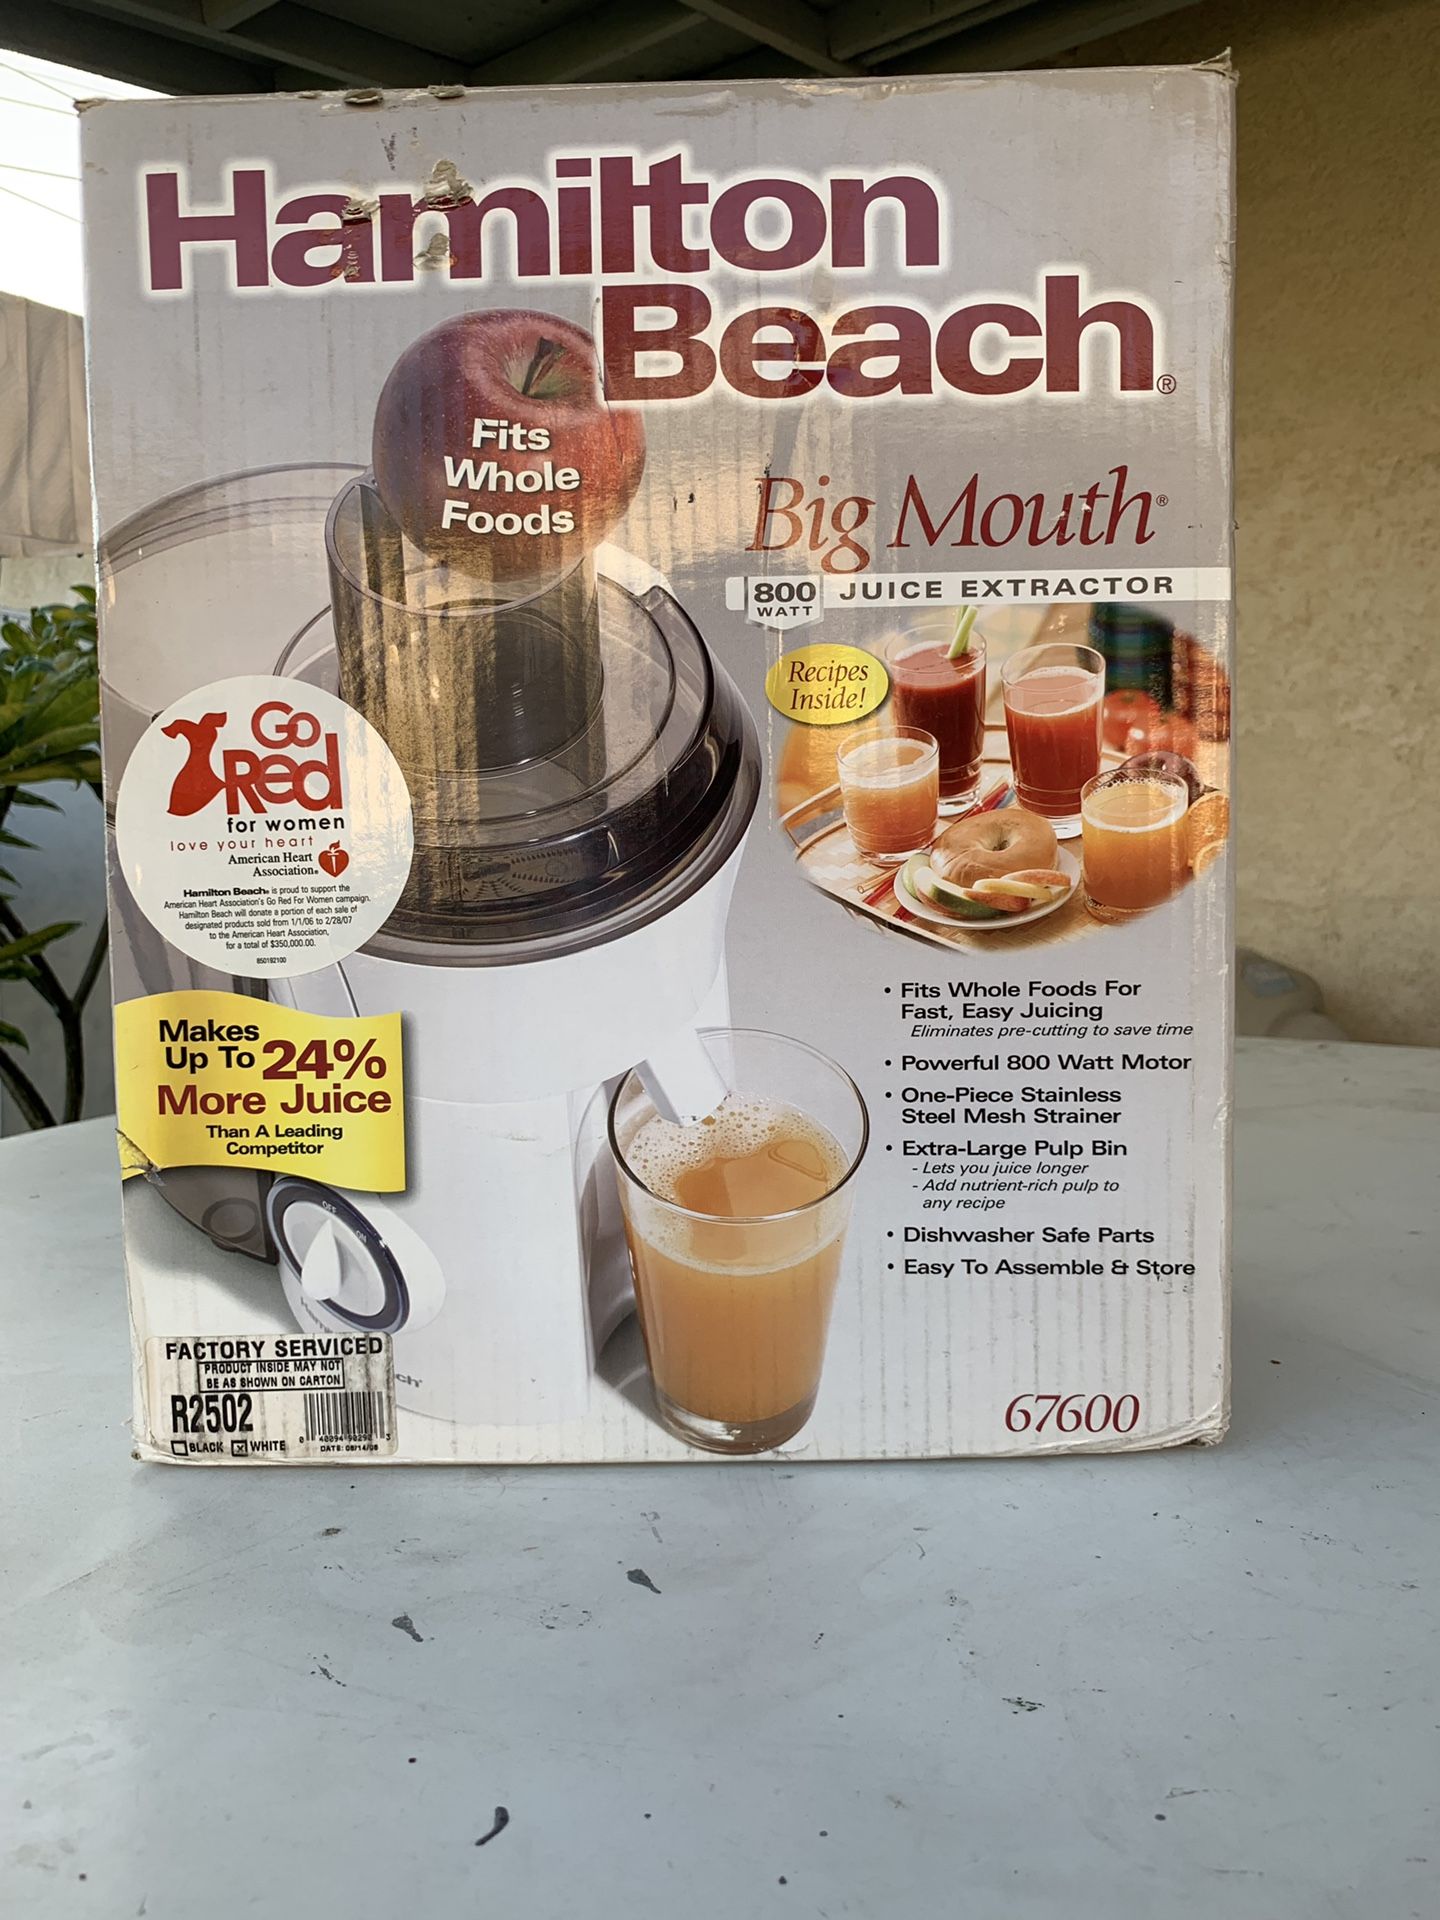 Hamilton Beach Big Mouth Juice Extractor